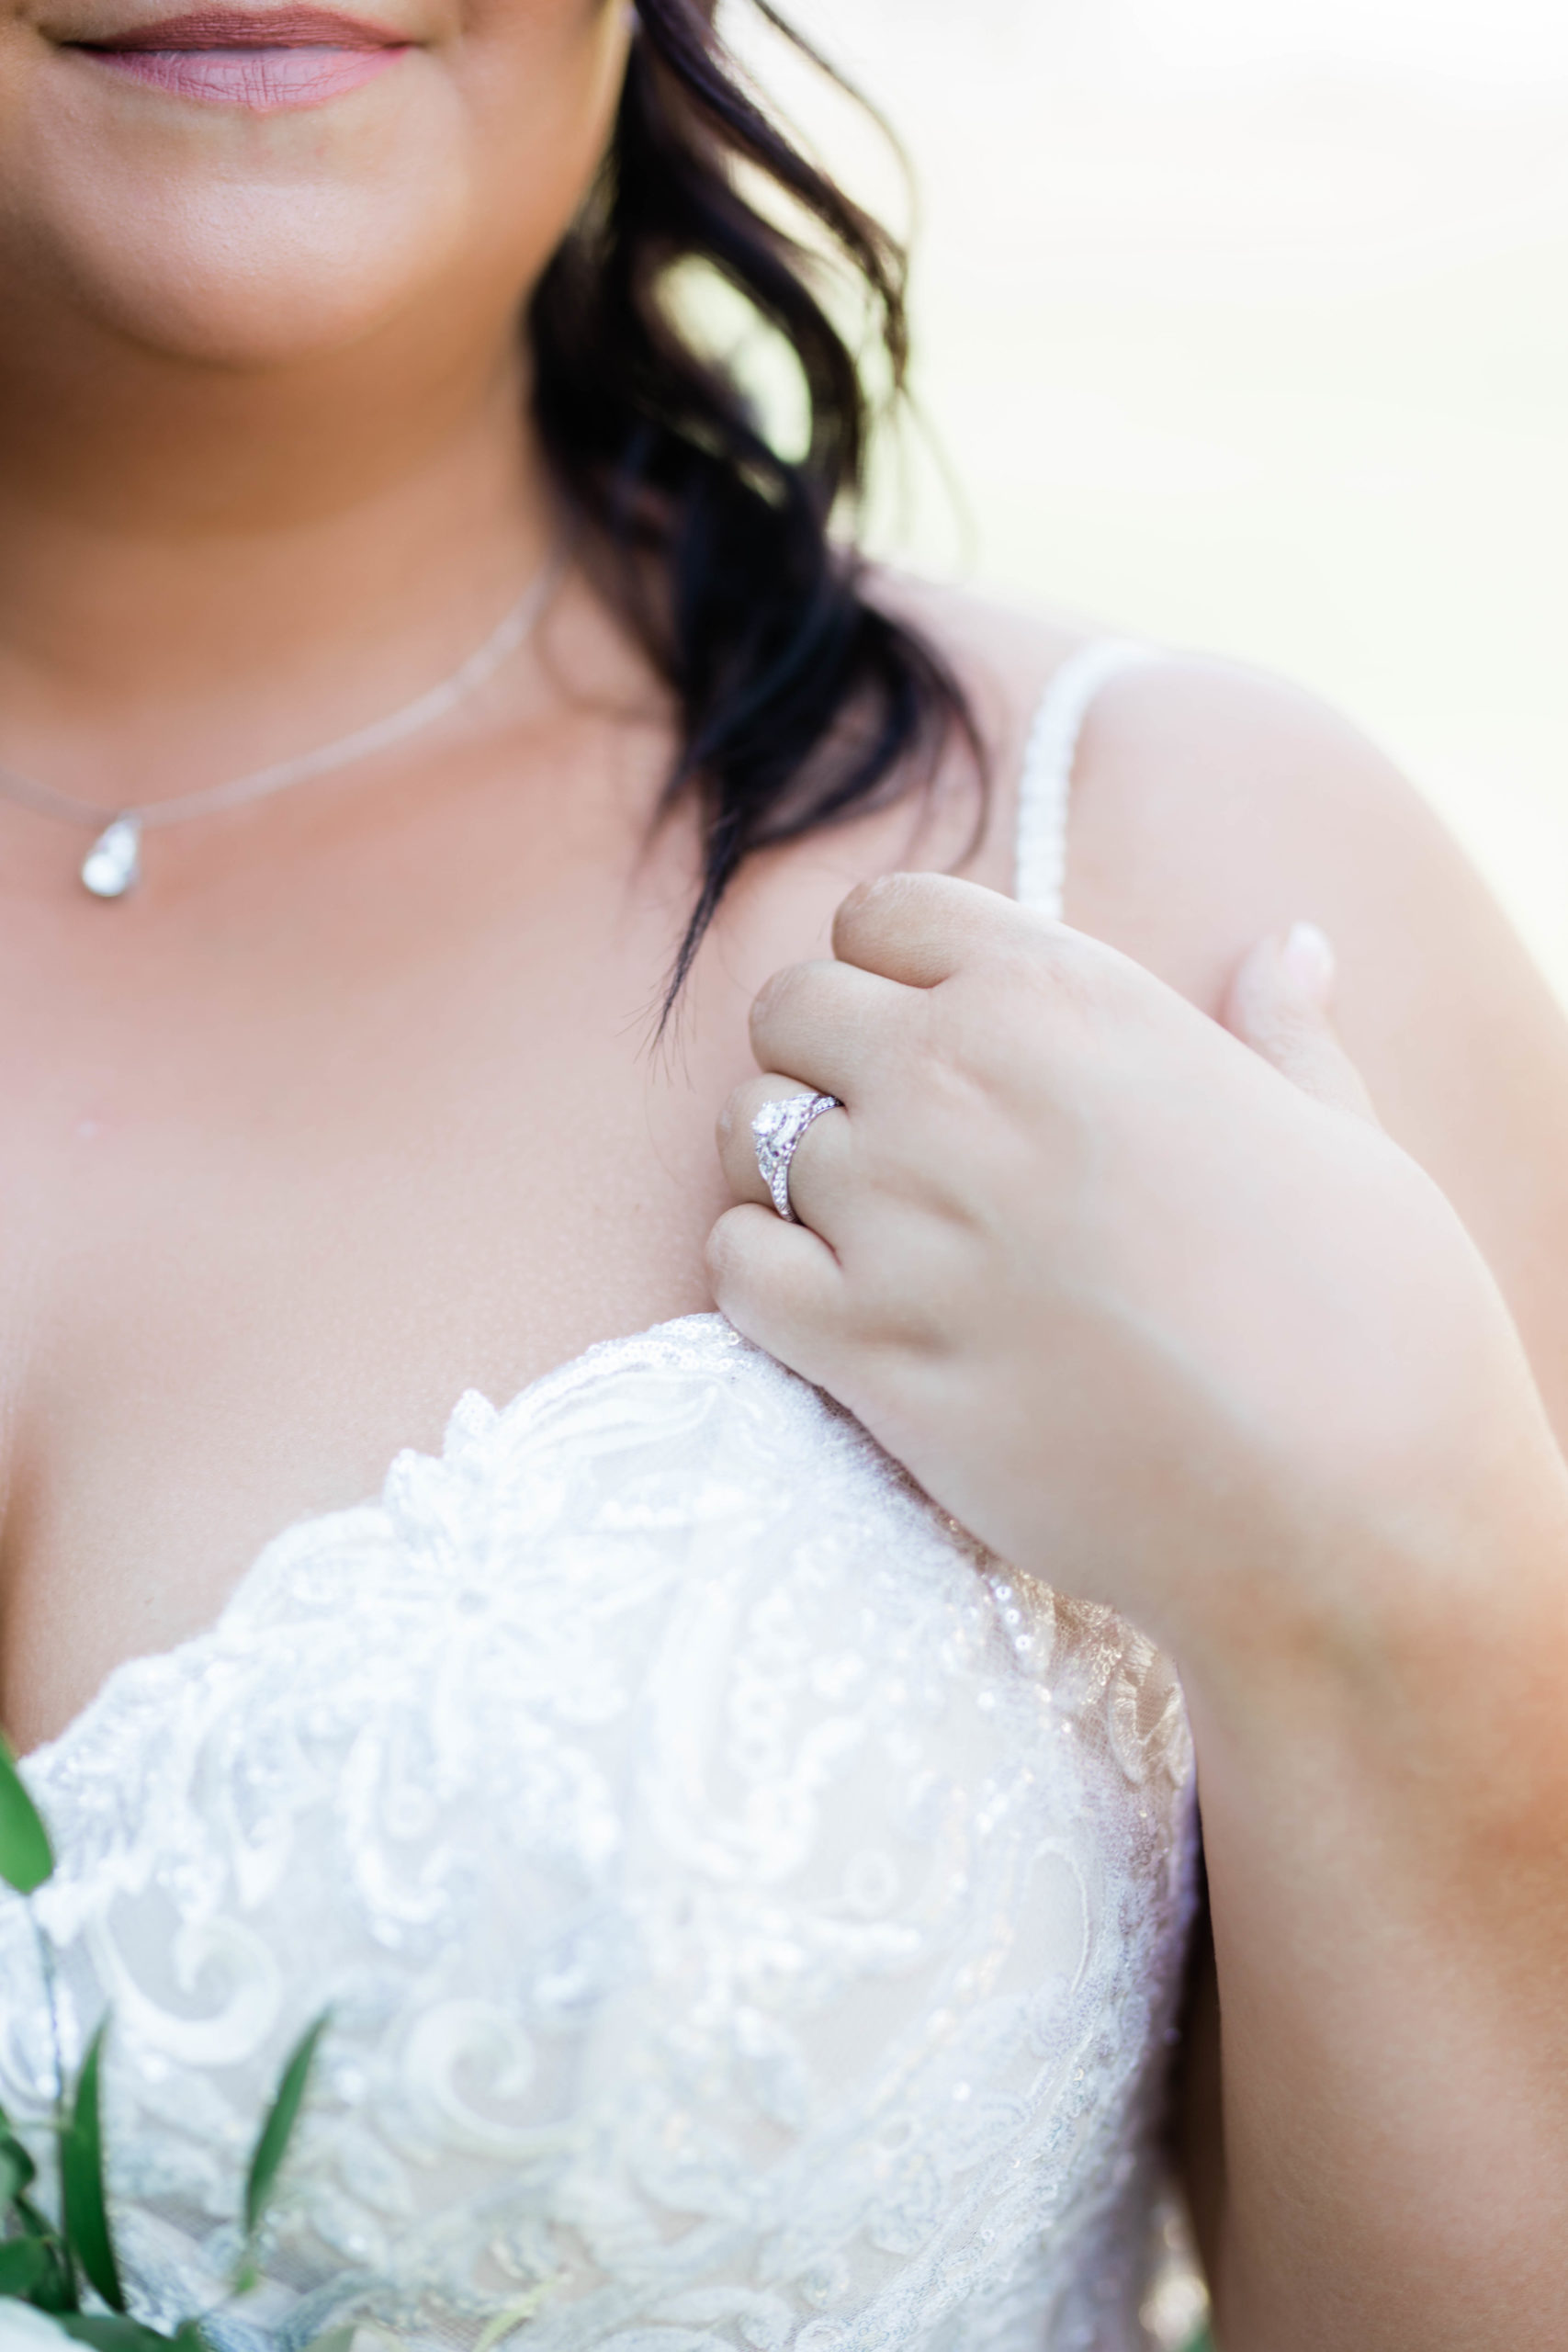 Boise wedding photographer captures bride touching sleeve and showing engagement ring